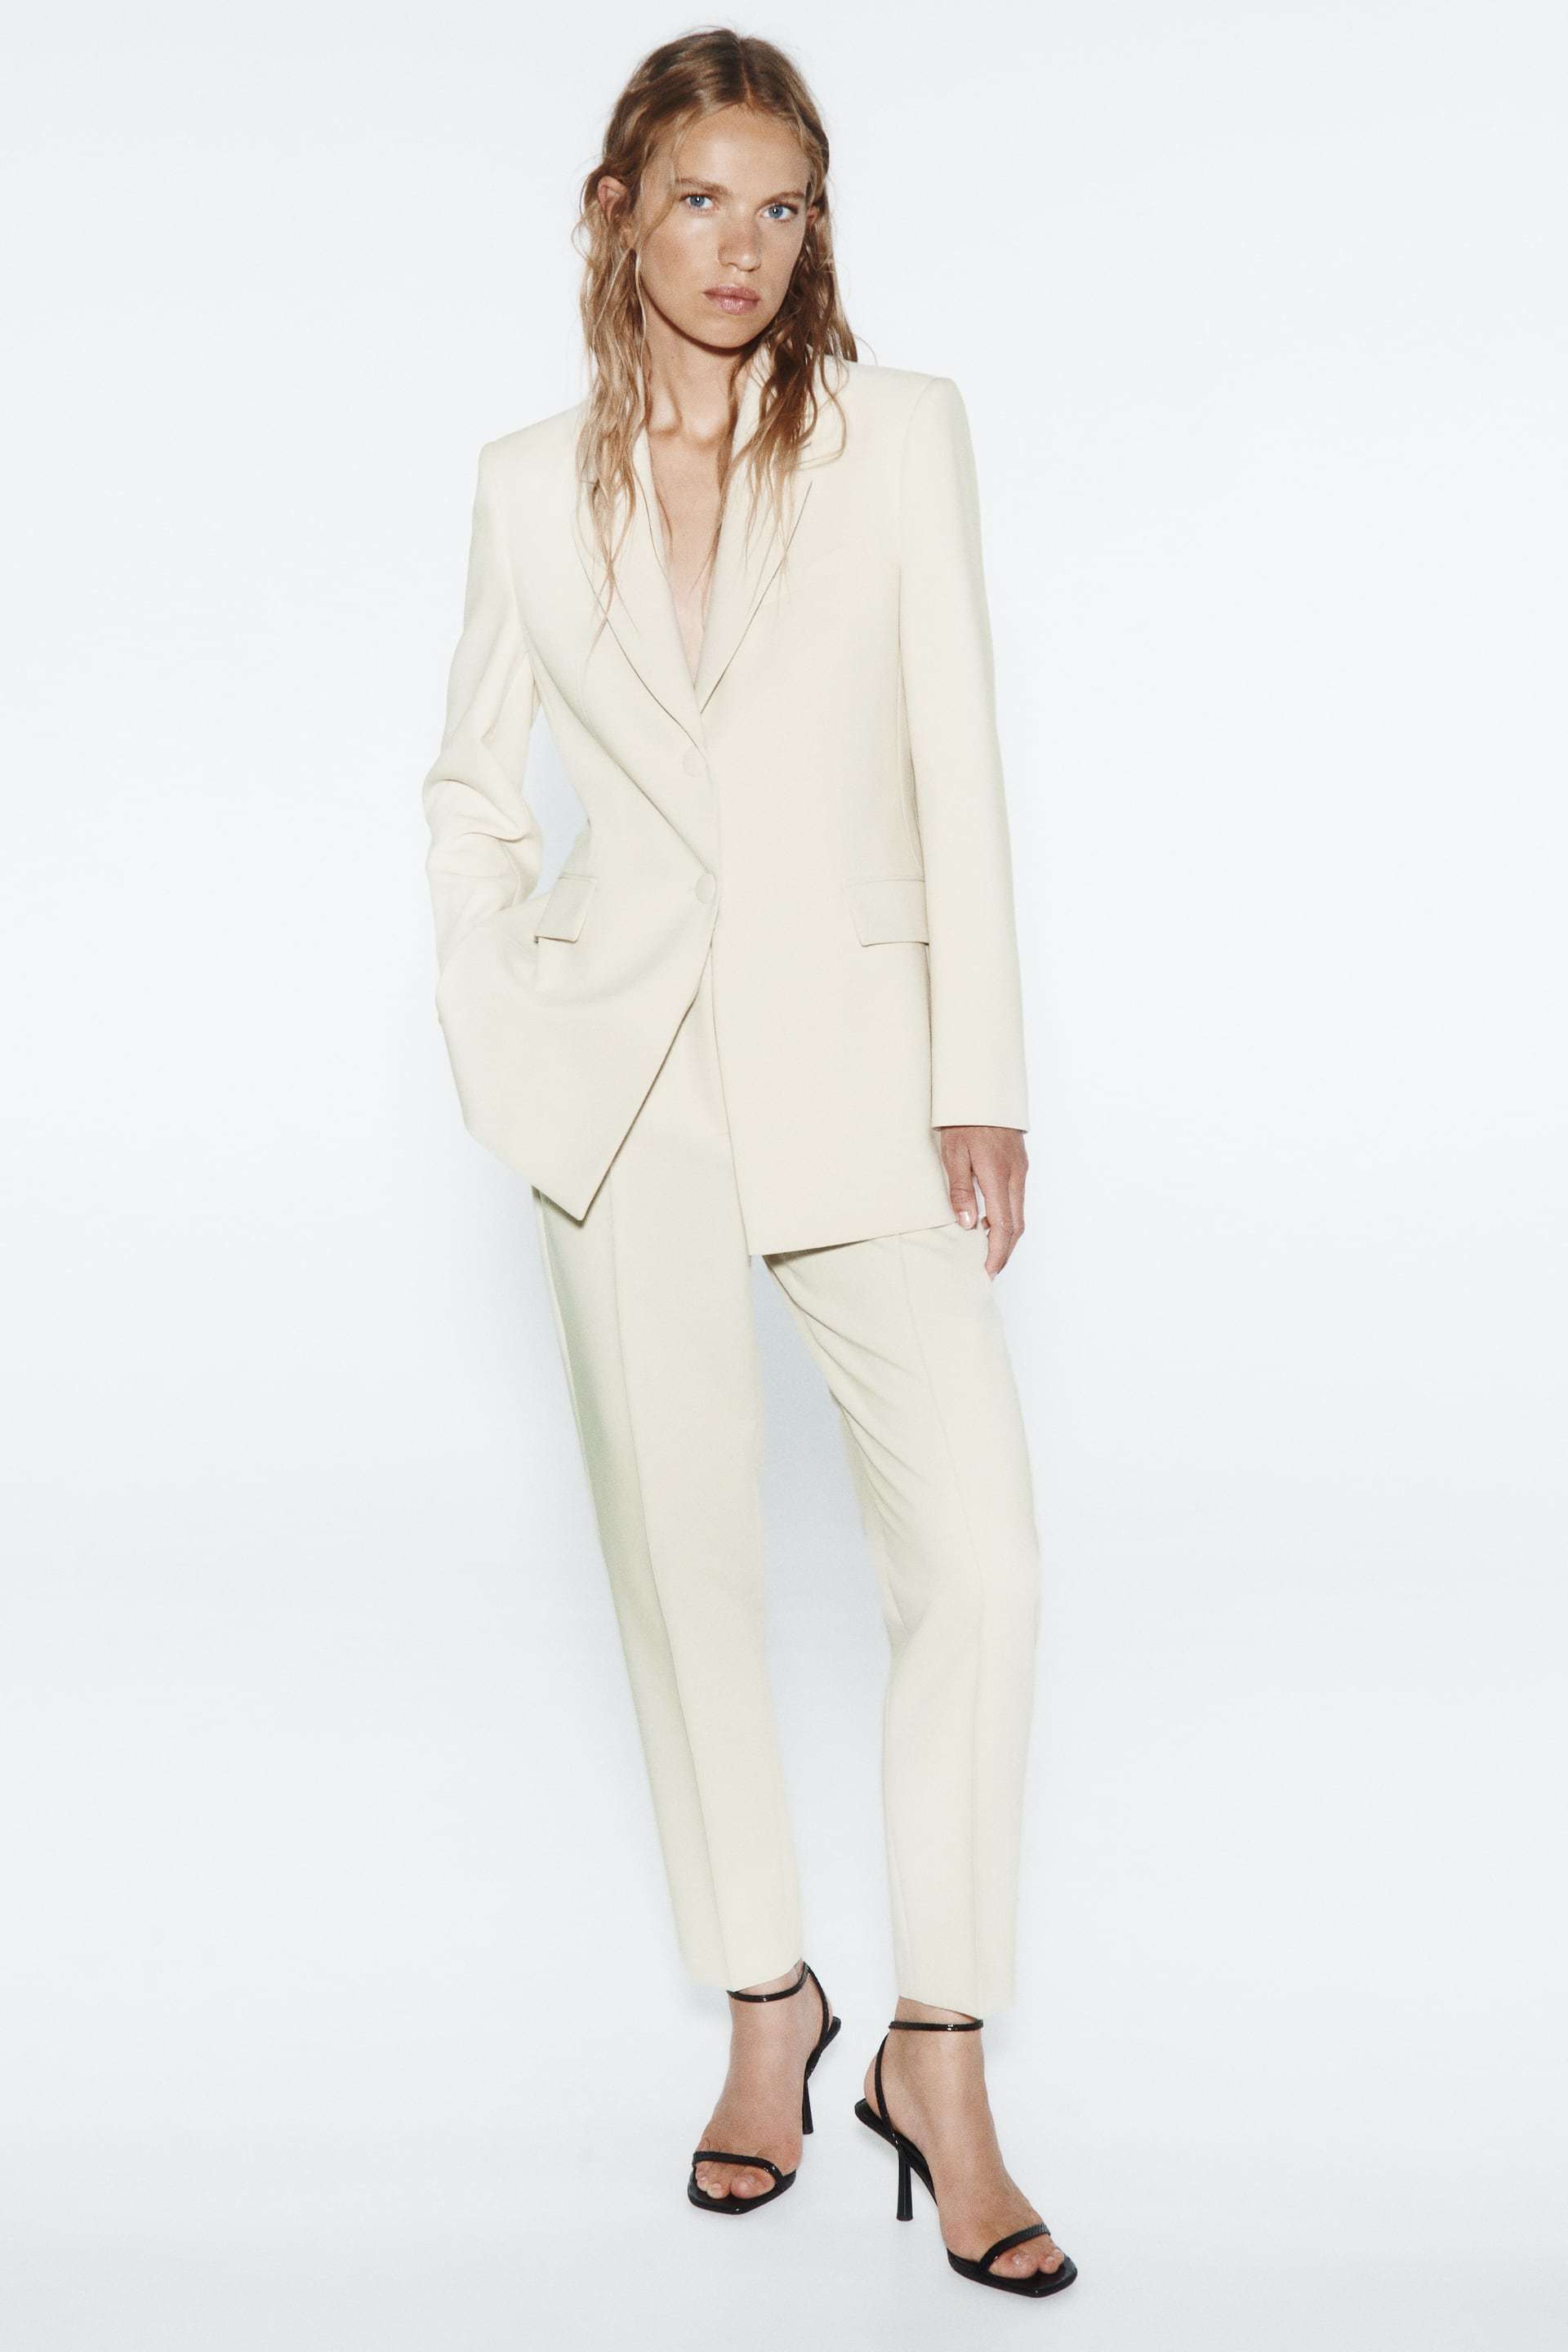 Traje de chaqueta blanco de Zara.